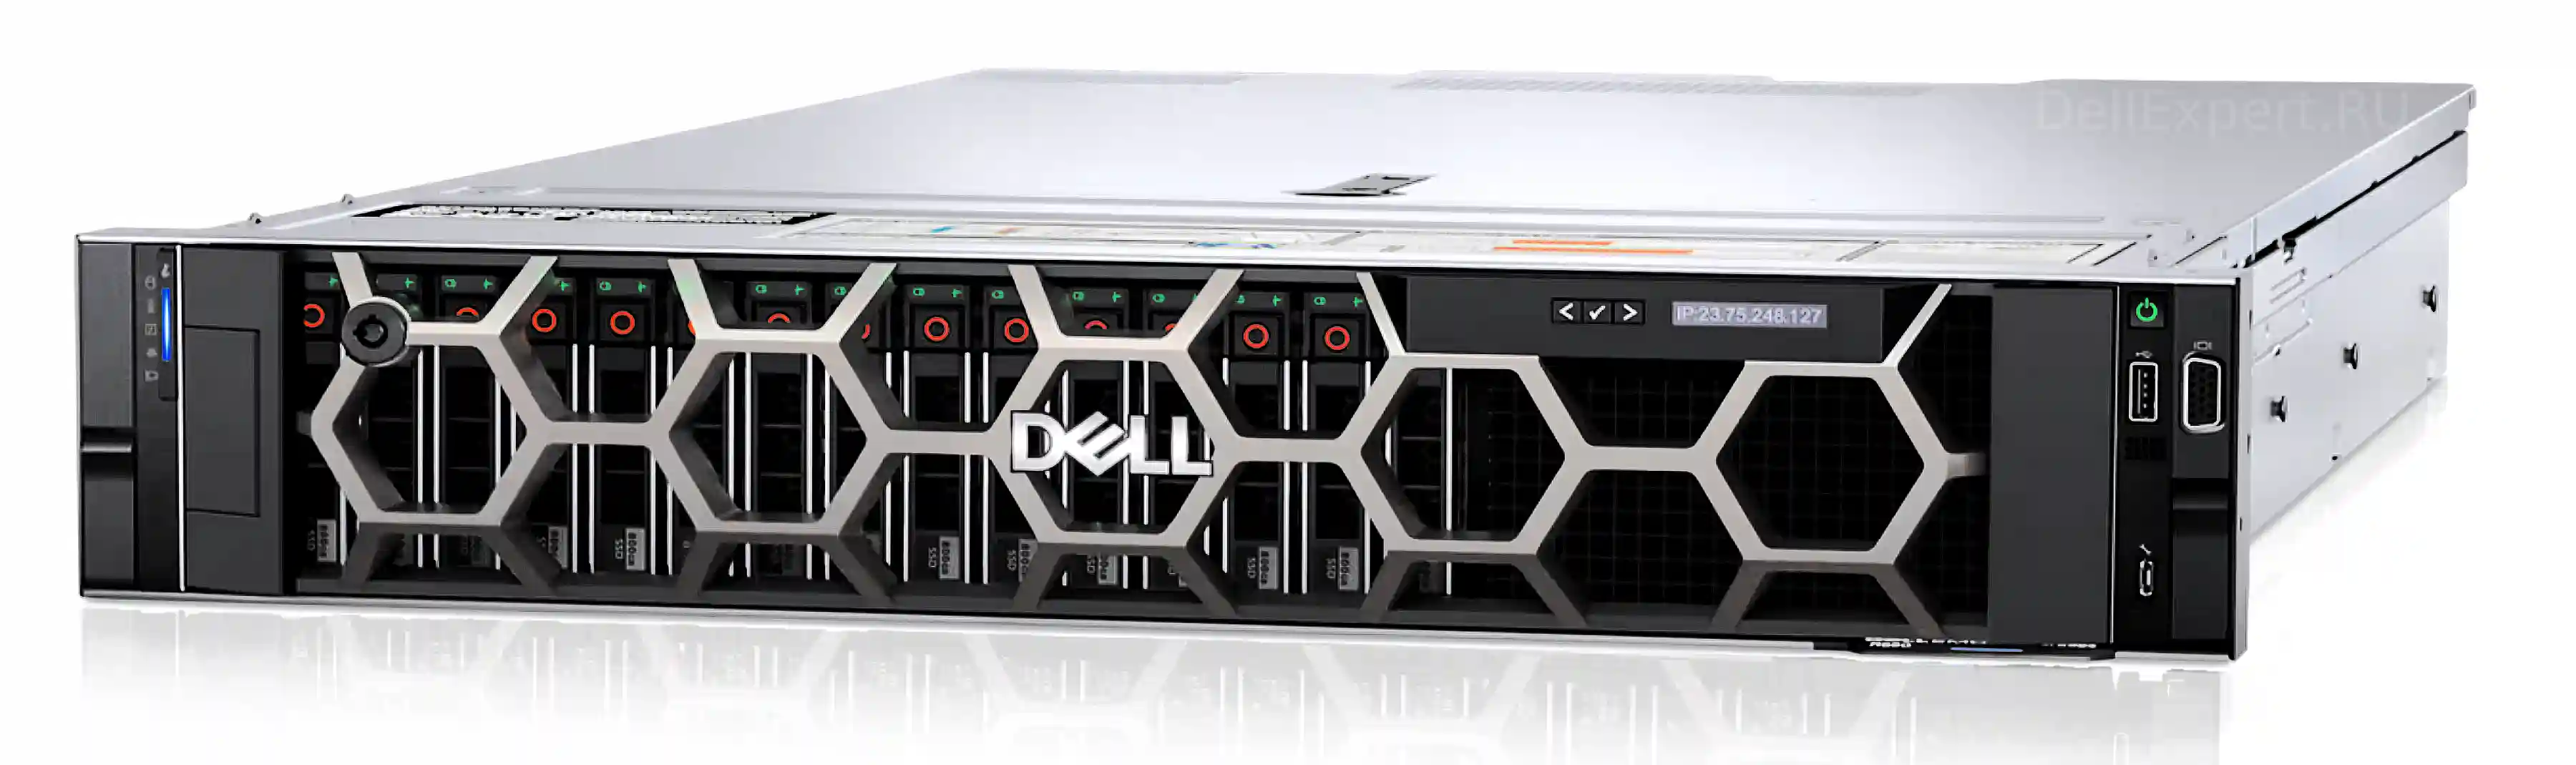 Dell R760xs Сервер Dell EMC PowerEdge R760xs 2U Rack Servers серверы